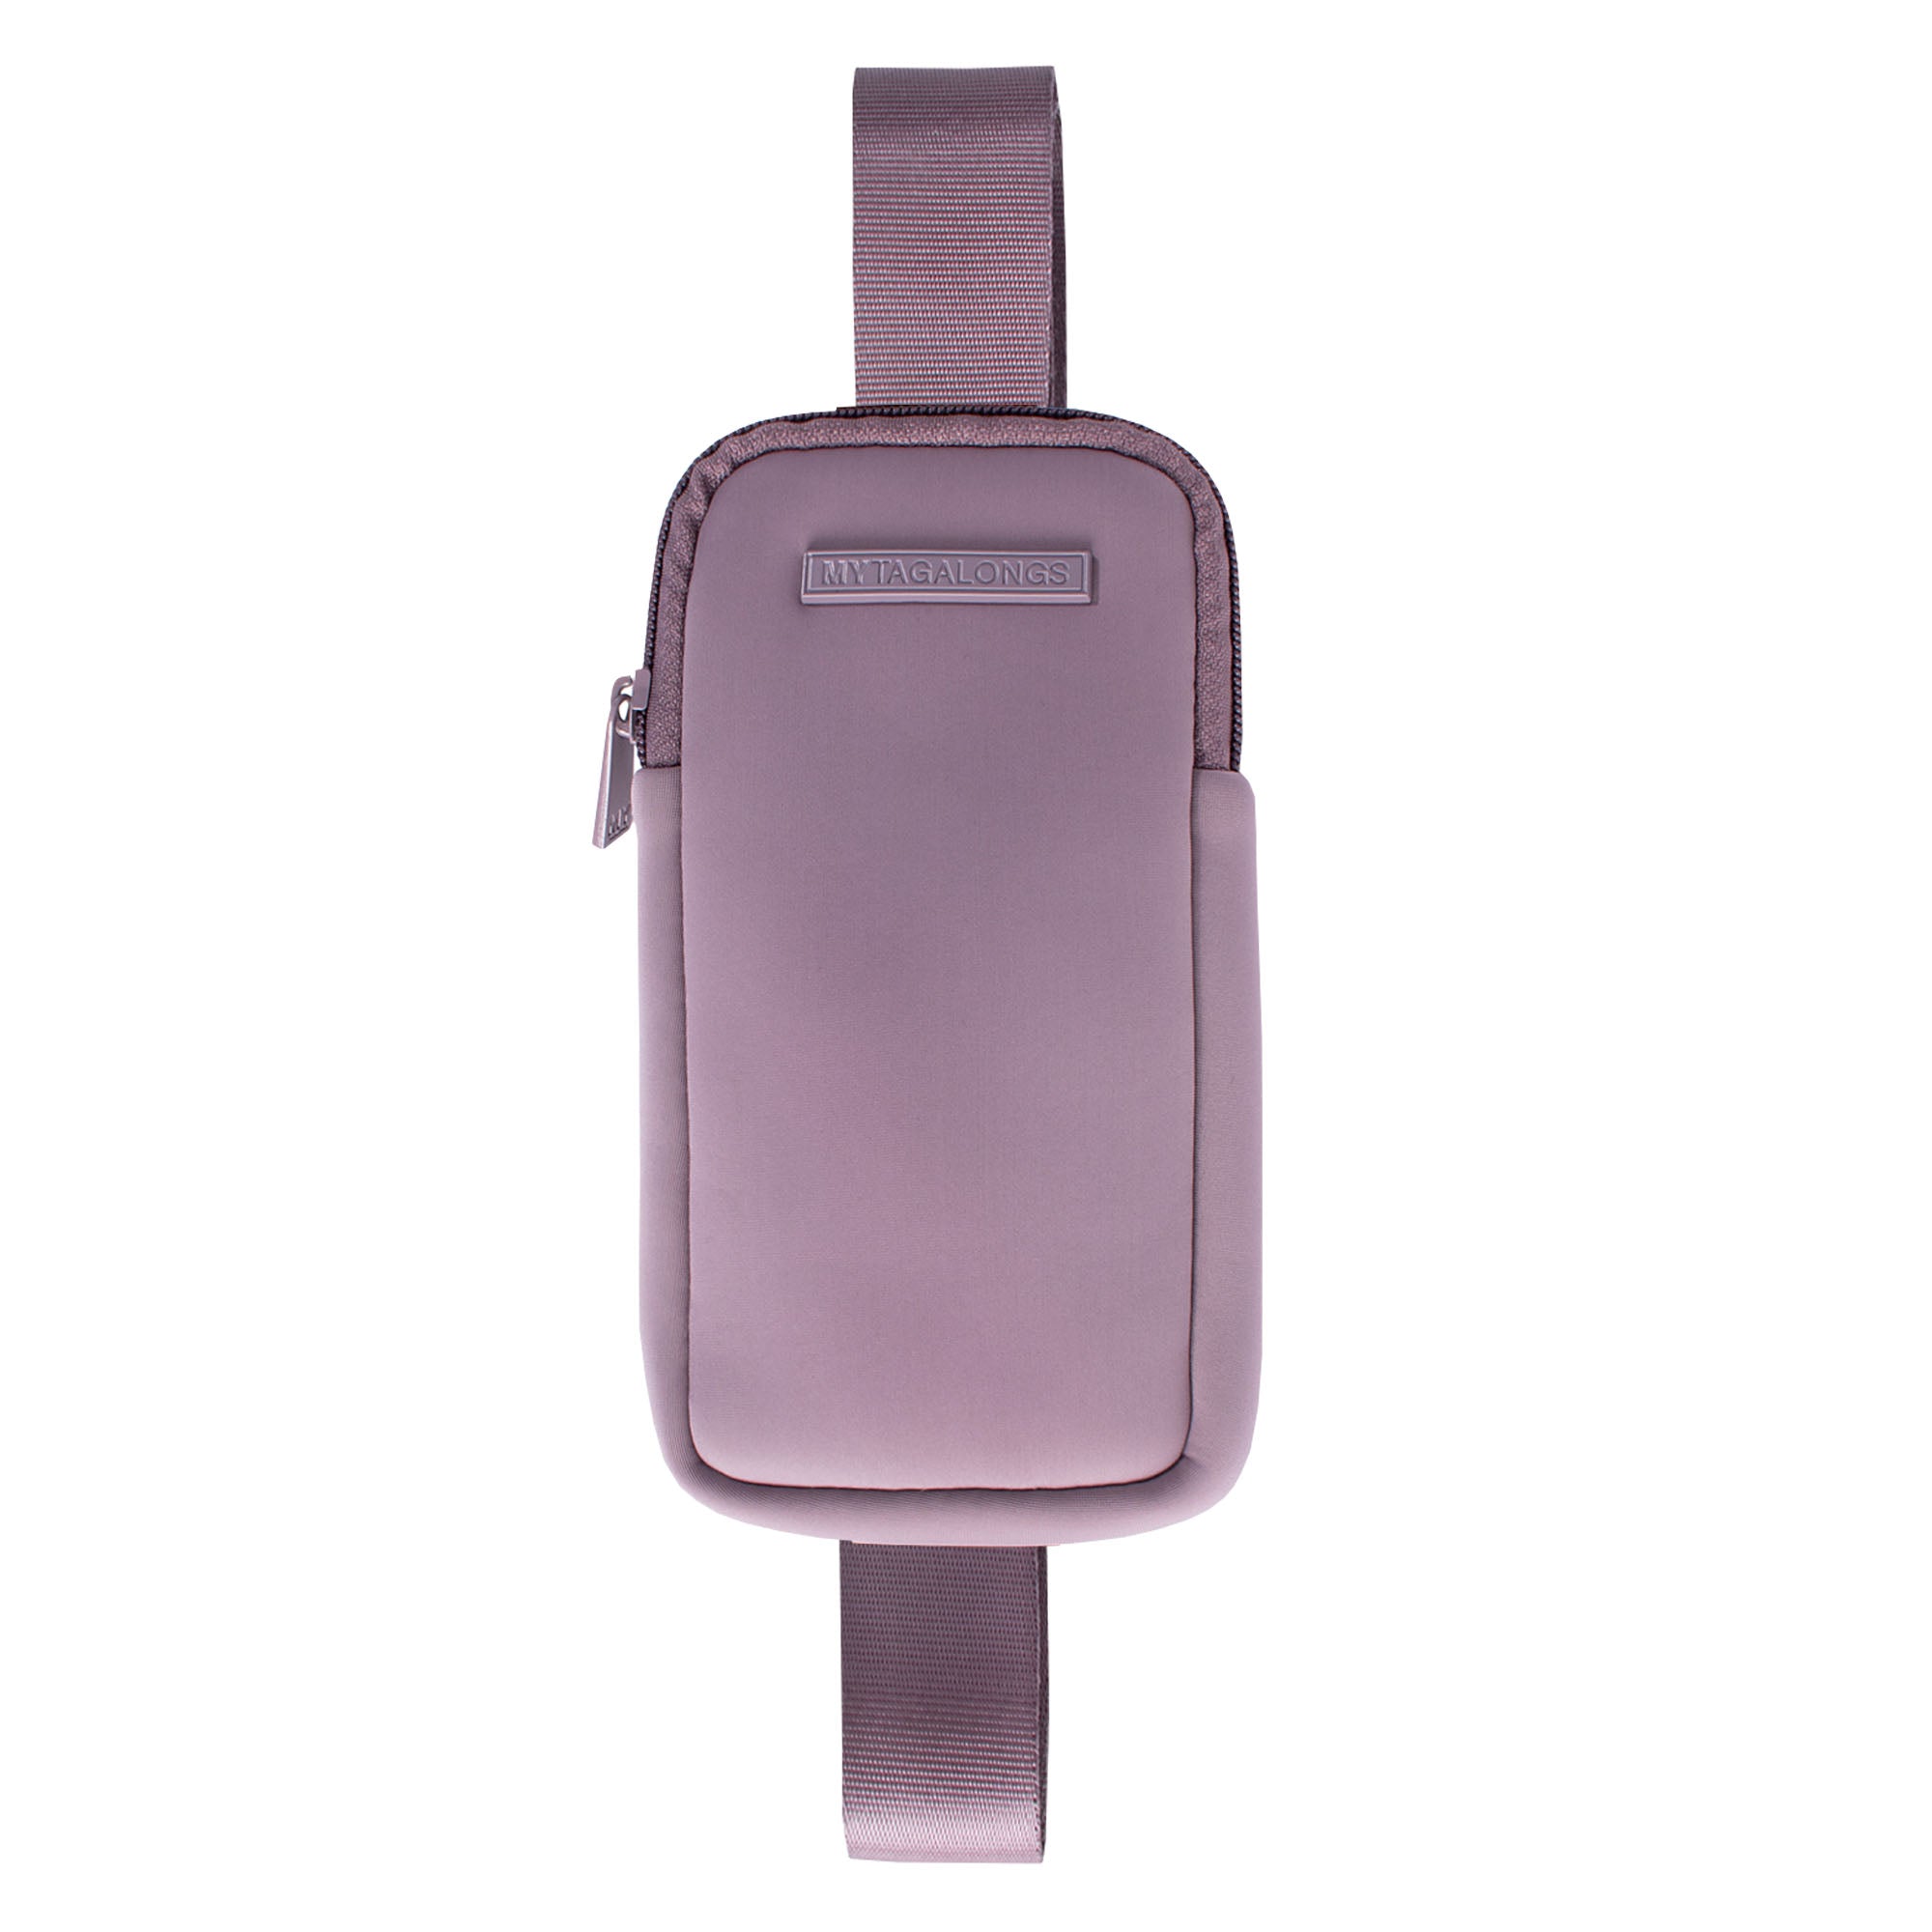 Purple phone sling cross body bag made of neoprene